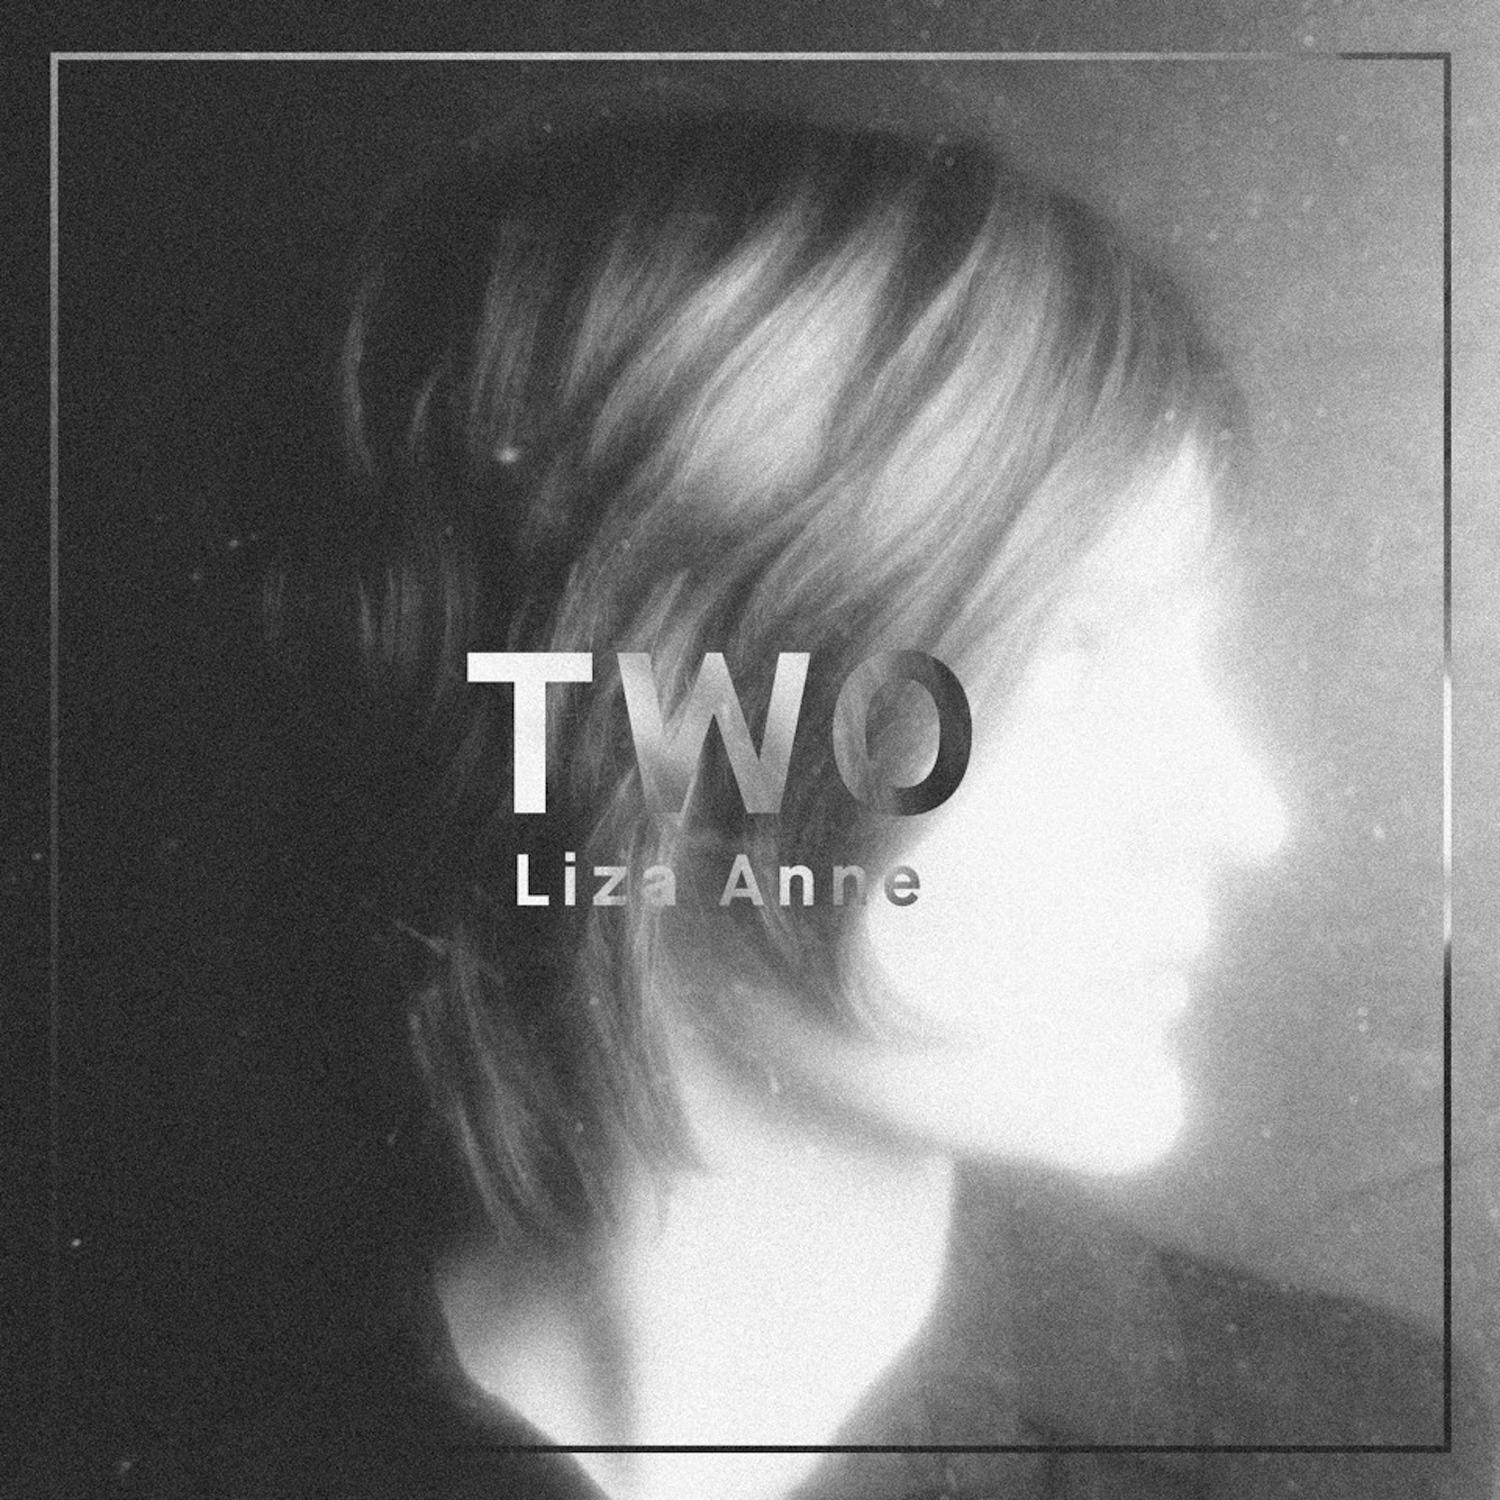 Lost歌词 歌手Liza Anne-专辑Two-单曲《Lost》LRC歌词下载